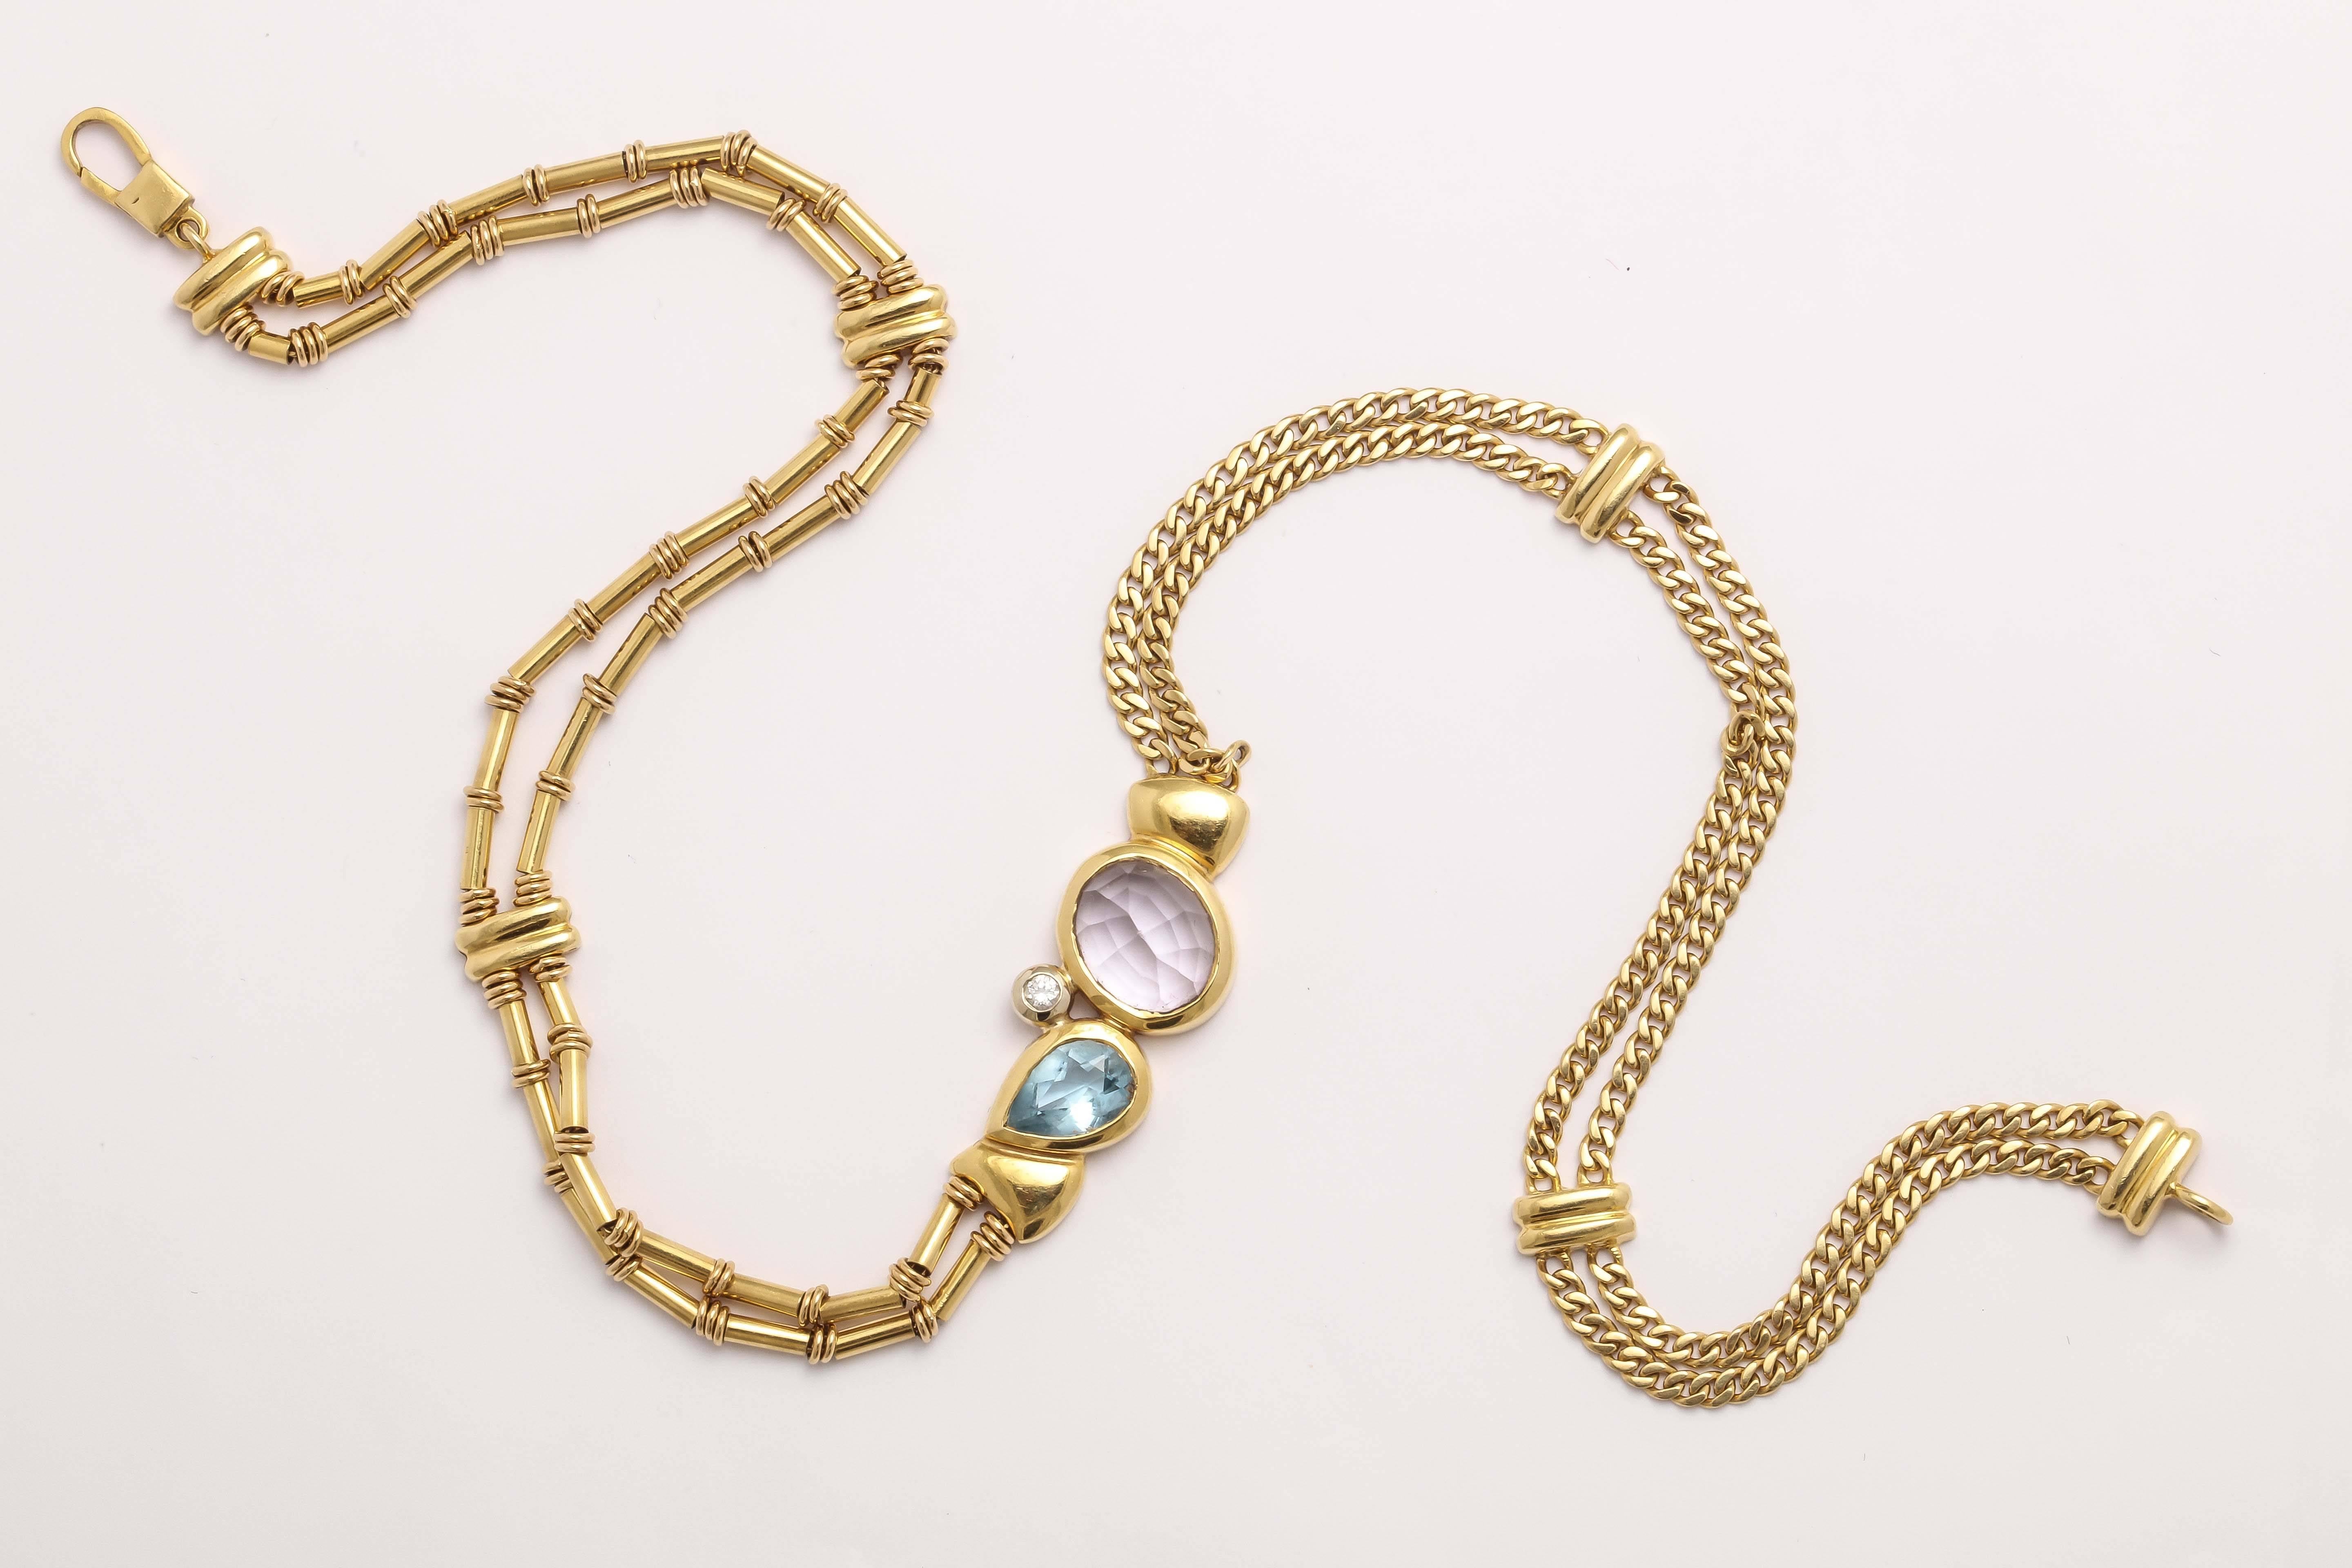 Modernist Manfredi Gold and Precious Stone Necklace